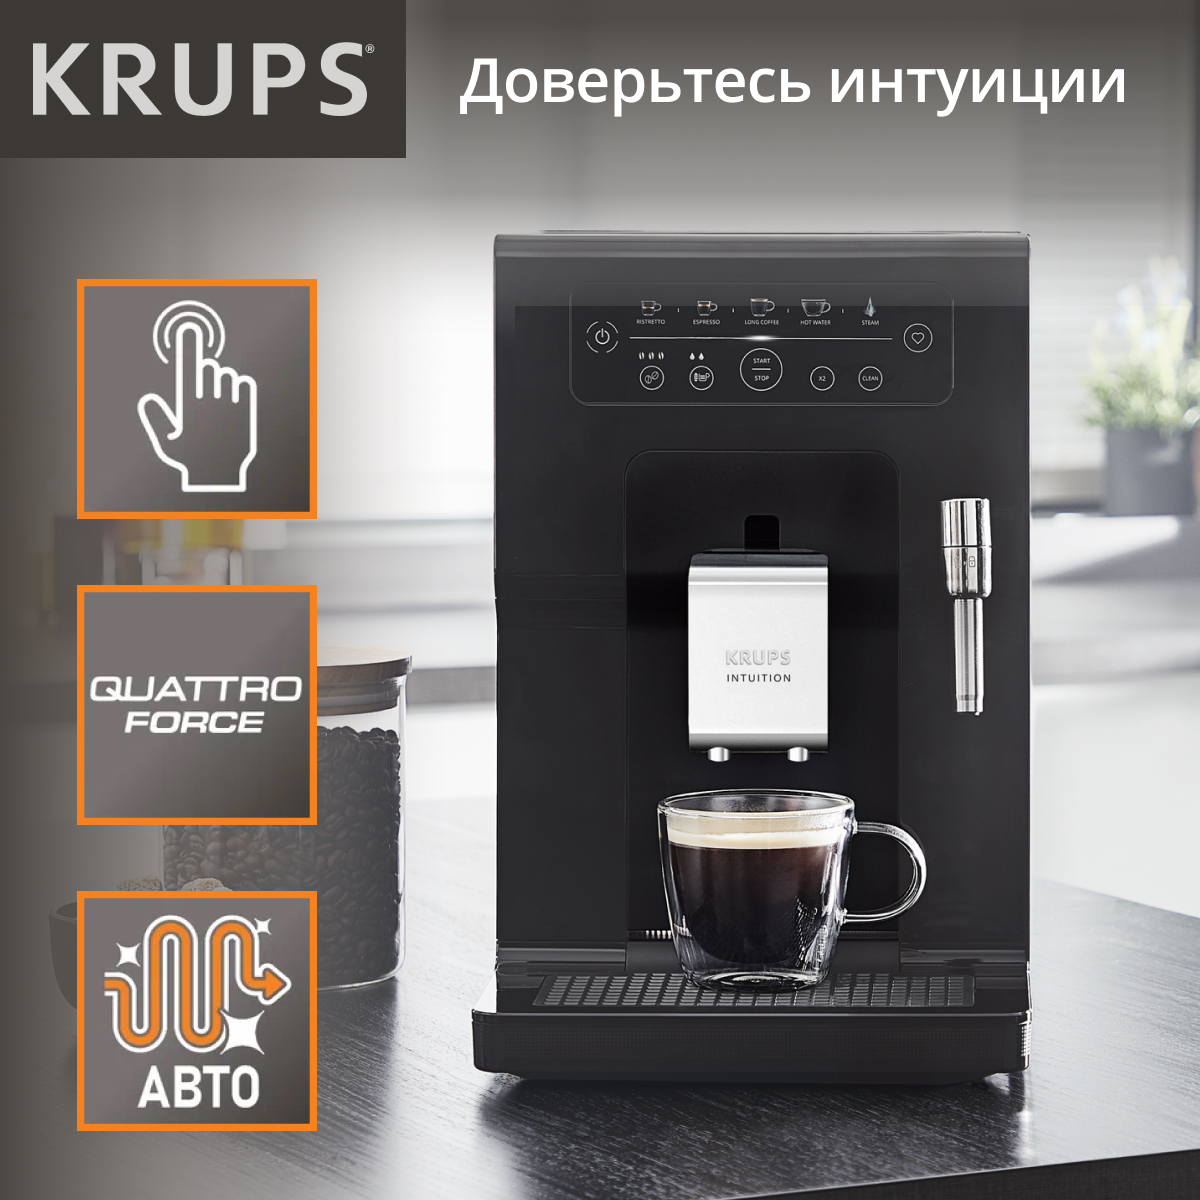 Автоматическая кофемашина Krups Intuition EA870810 Black кофемашина автоматическая krups evidence plus ea894810